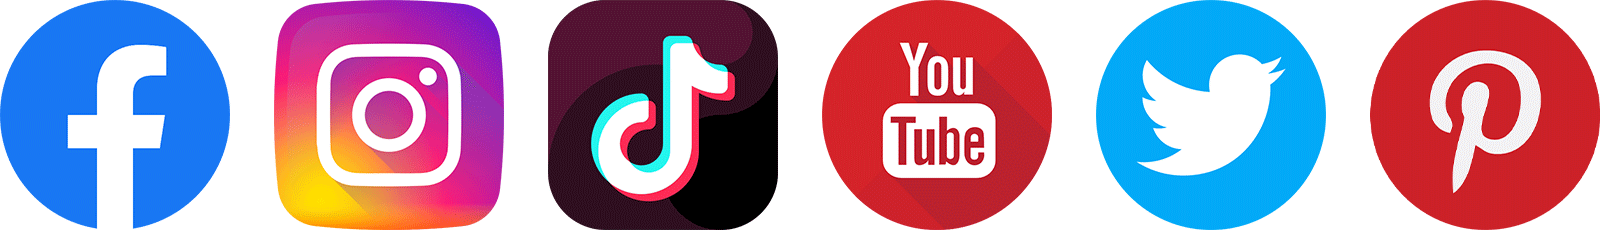 Socialmedia Logos